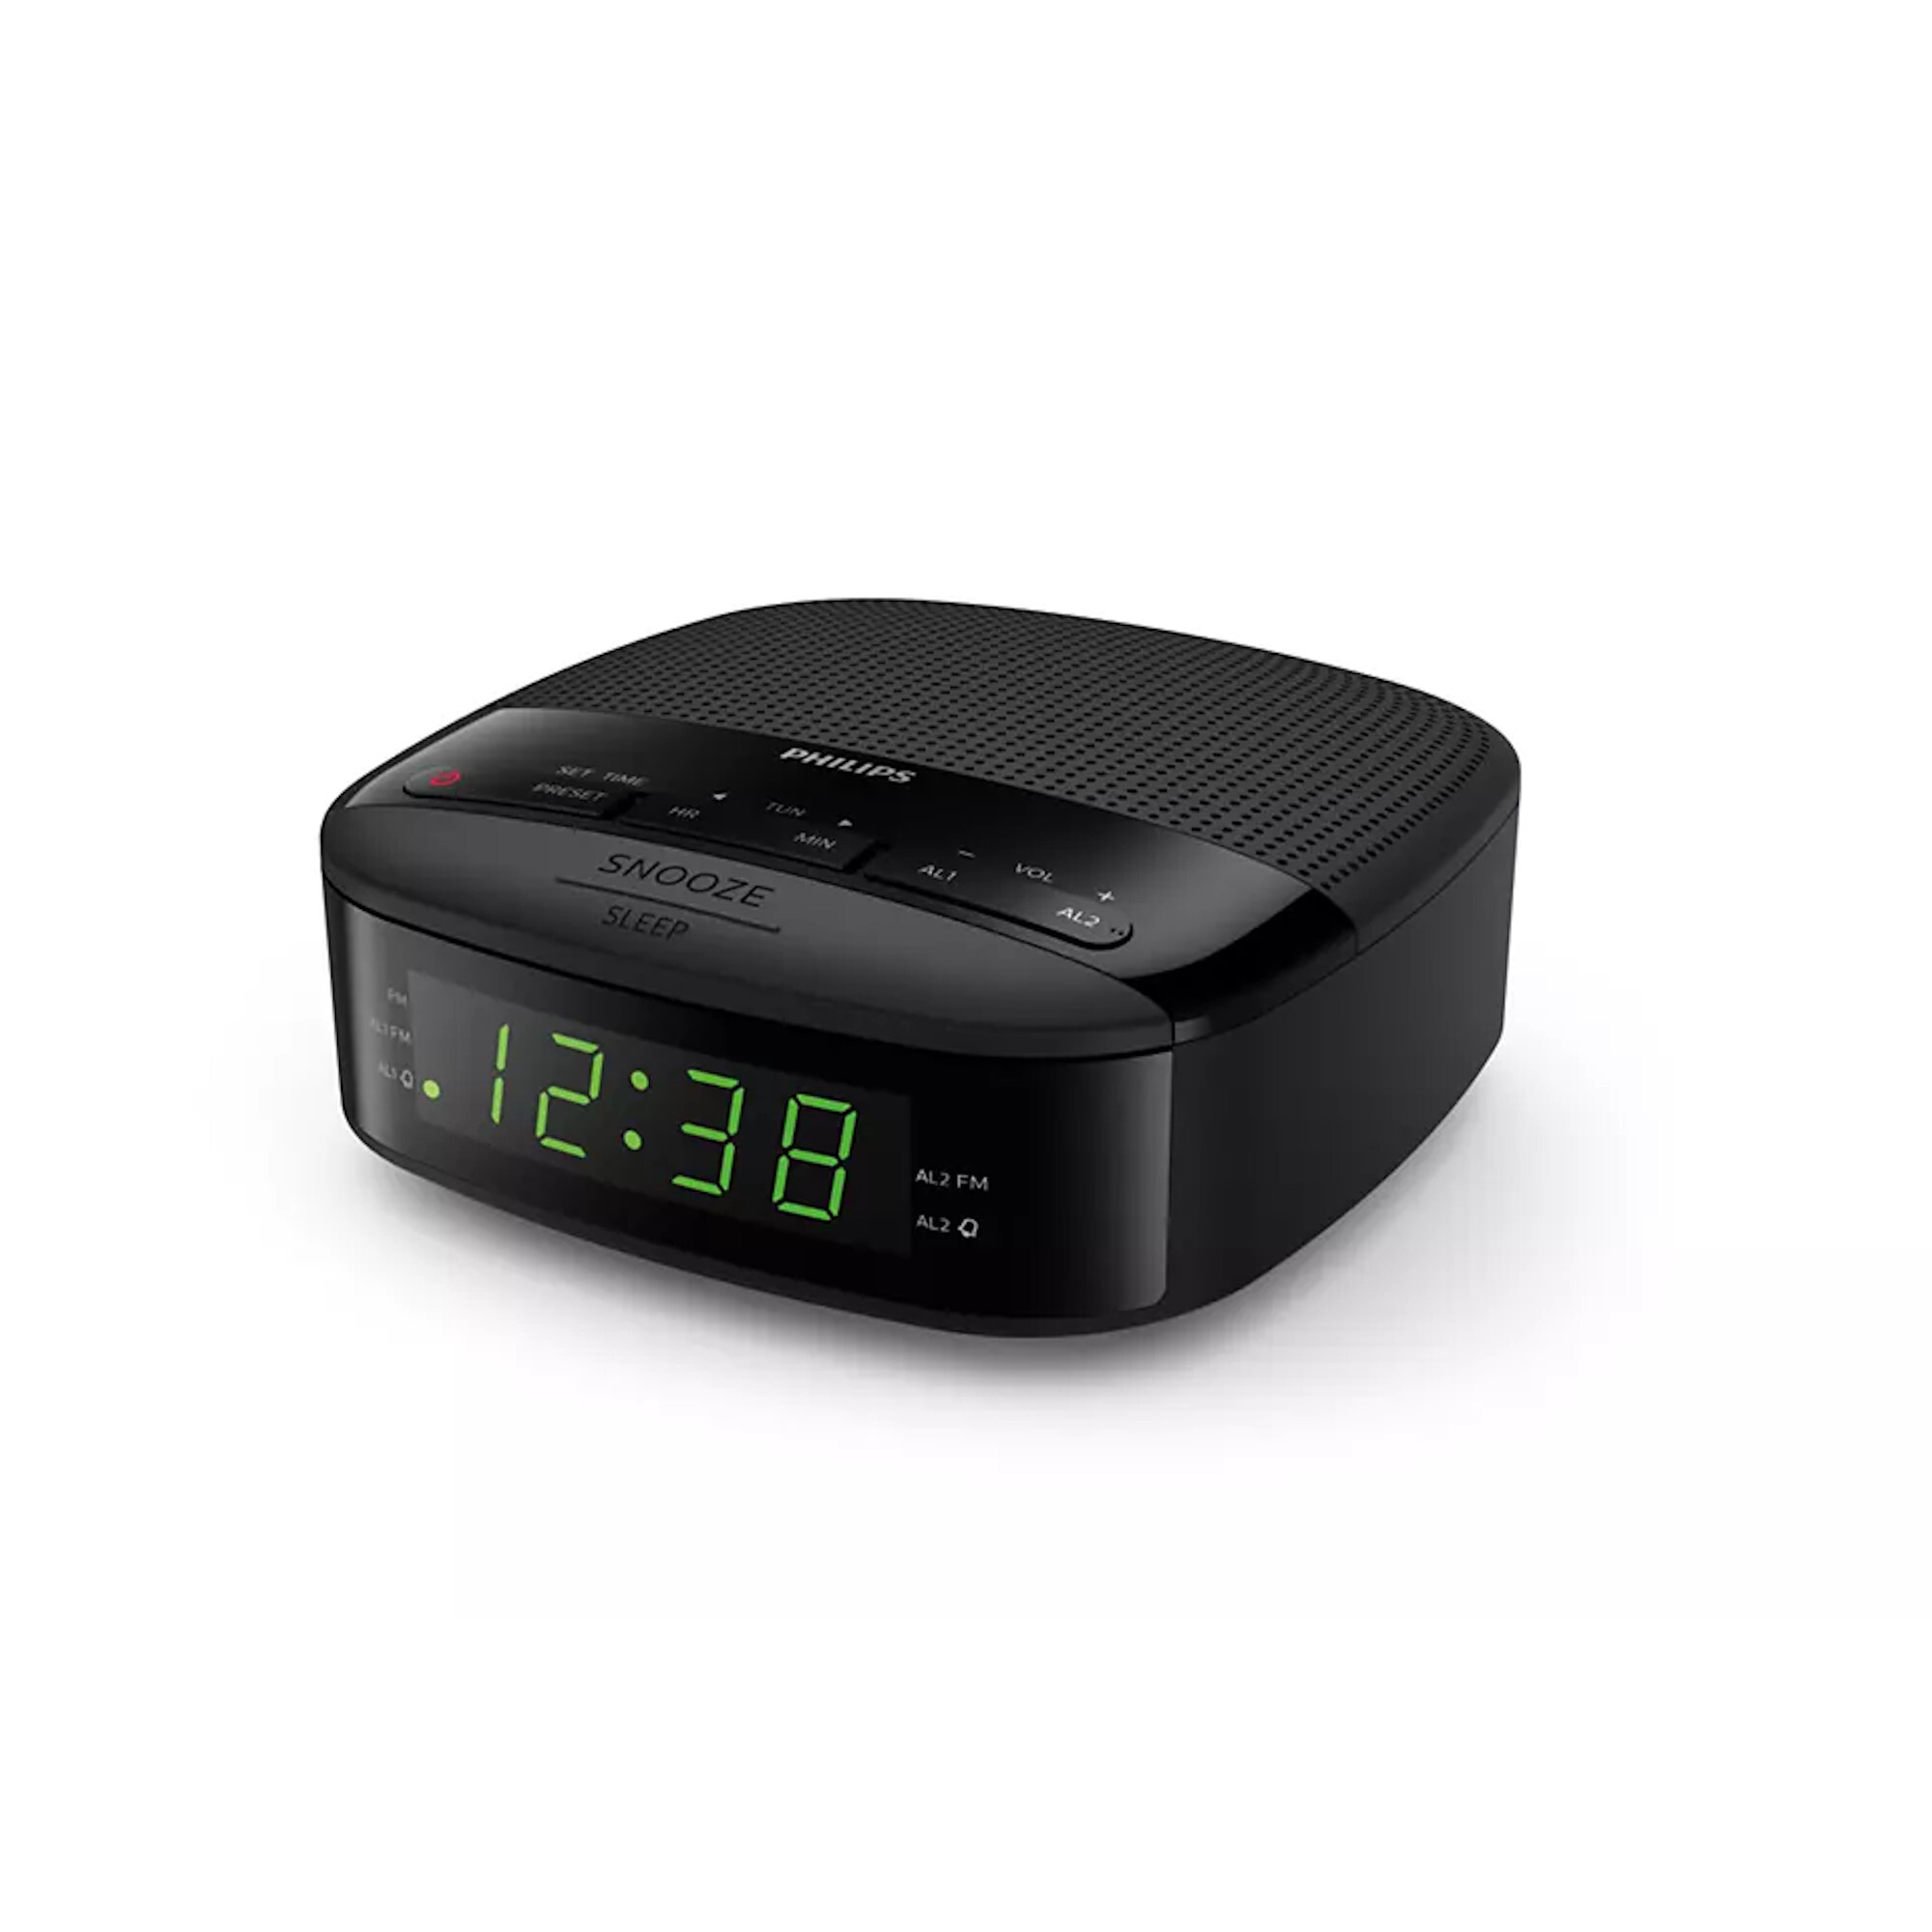 HAVIT M3 Radio Radio reloj despertador con altavoz Bluetooth - NIKOTRON, Tecnología con garantía, Impresoras, Laptop